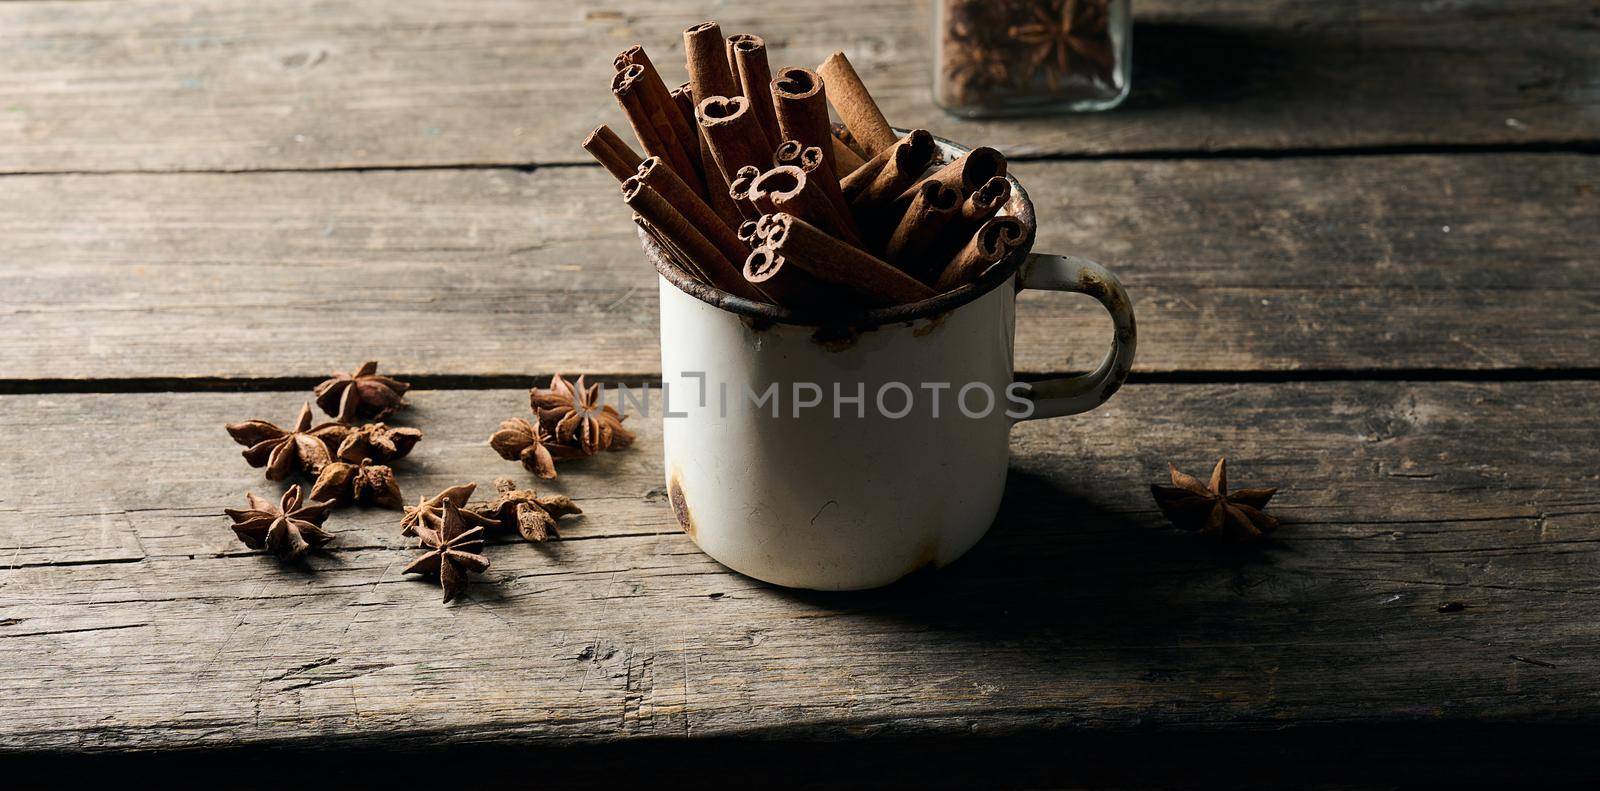 dry brown cinnamon sticks in a metal old mug, culinary spice